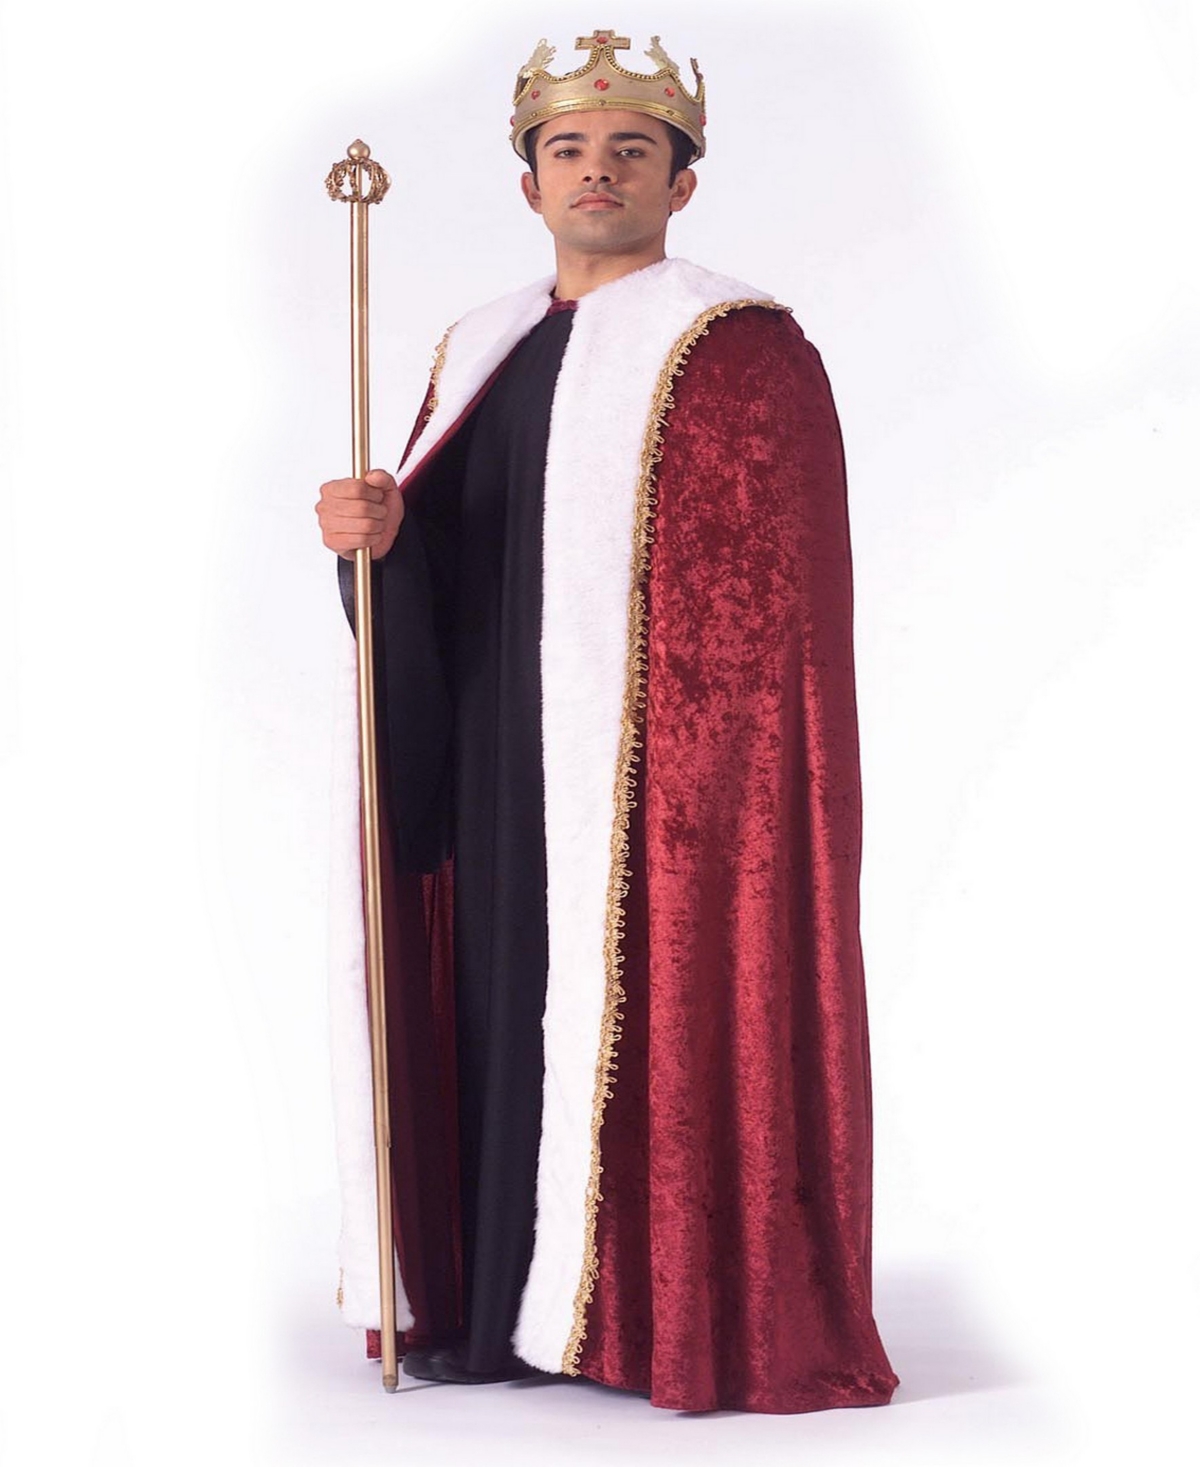 Buy Seasons Men's King Robe Costume - Red